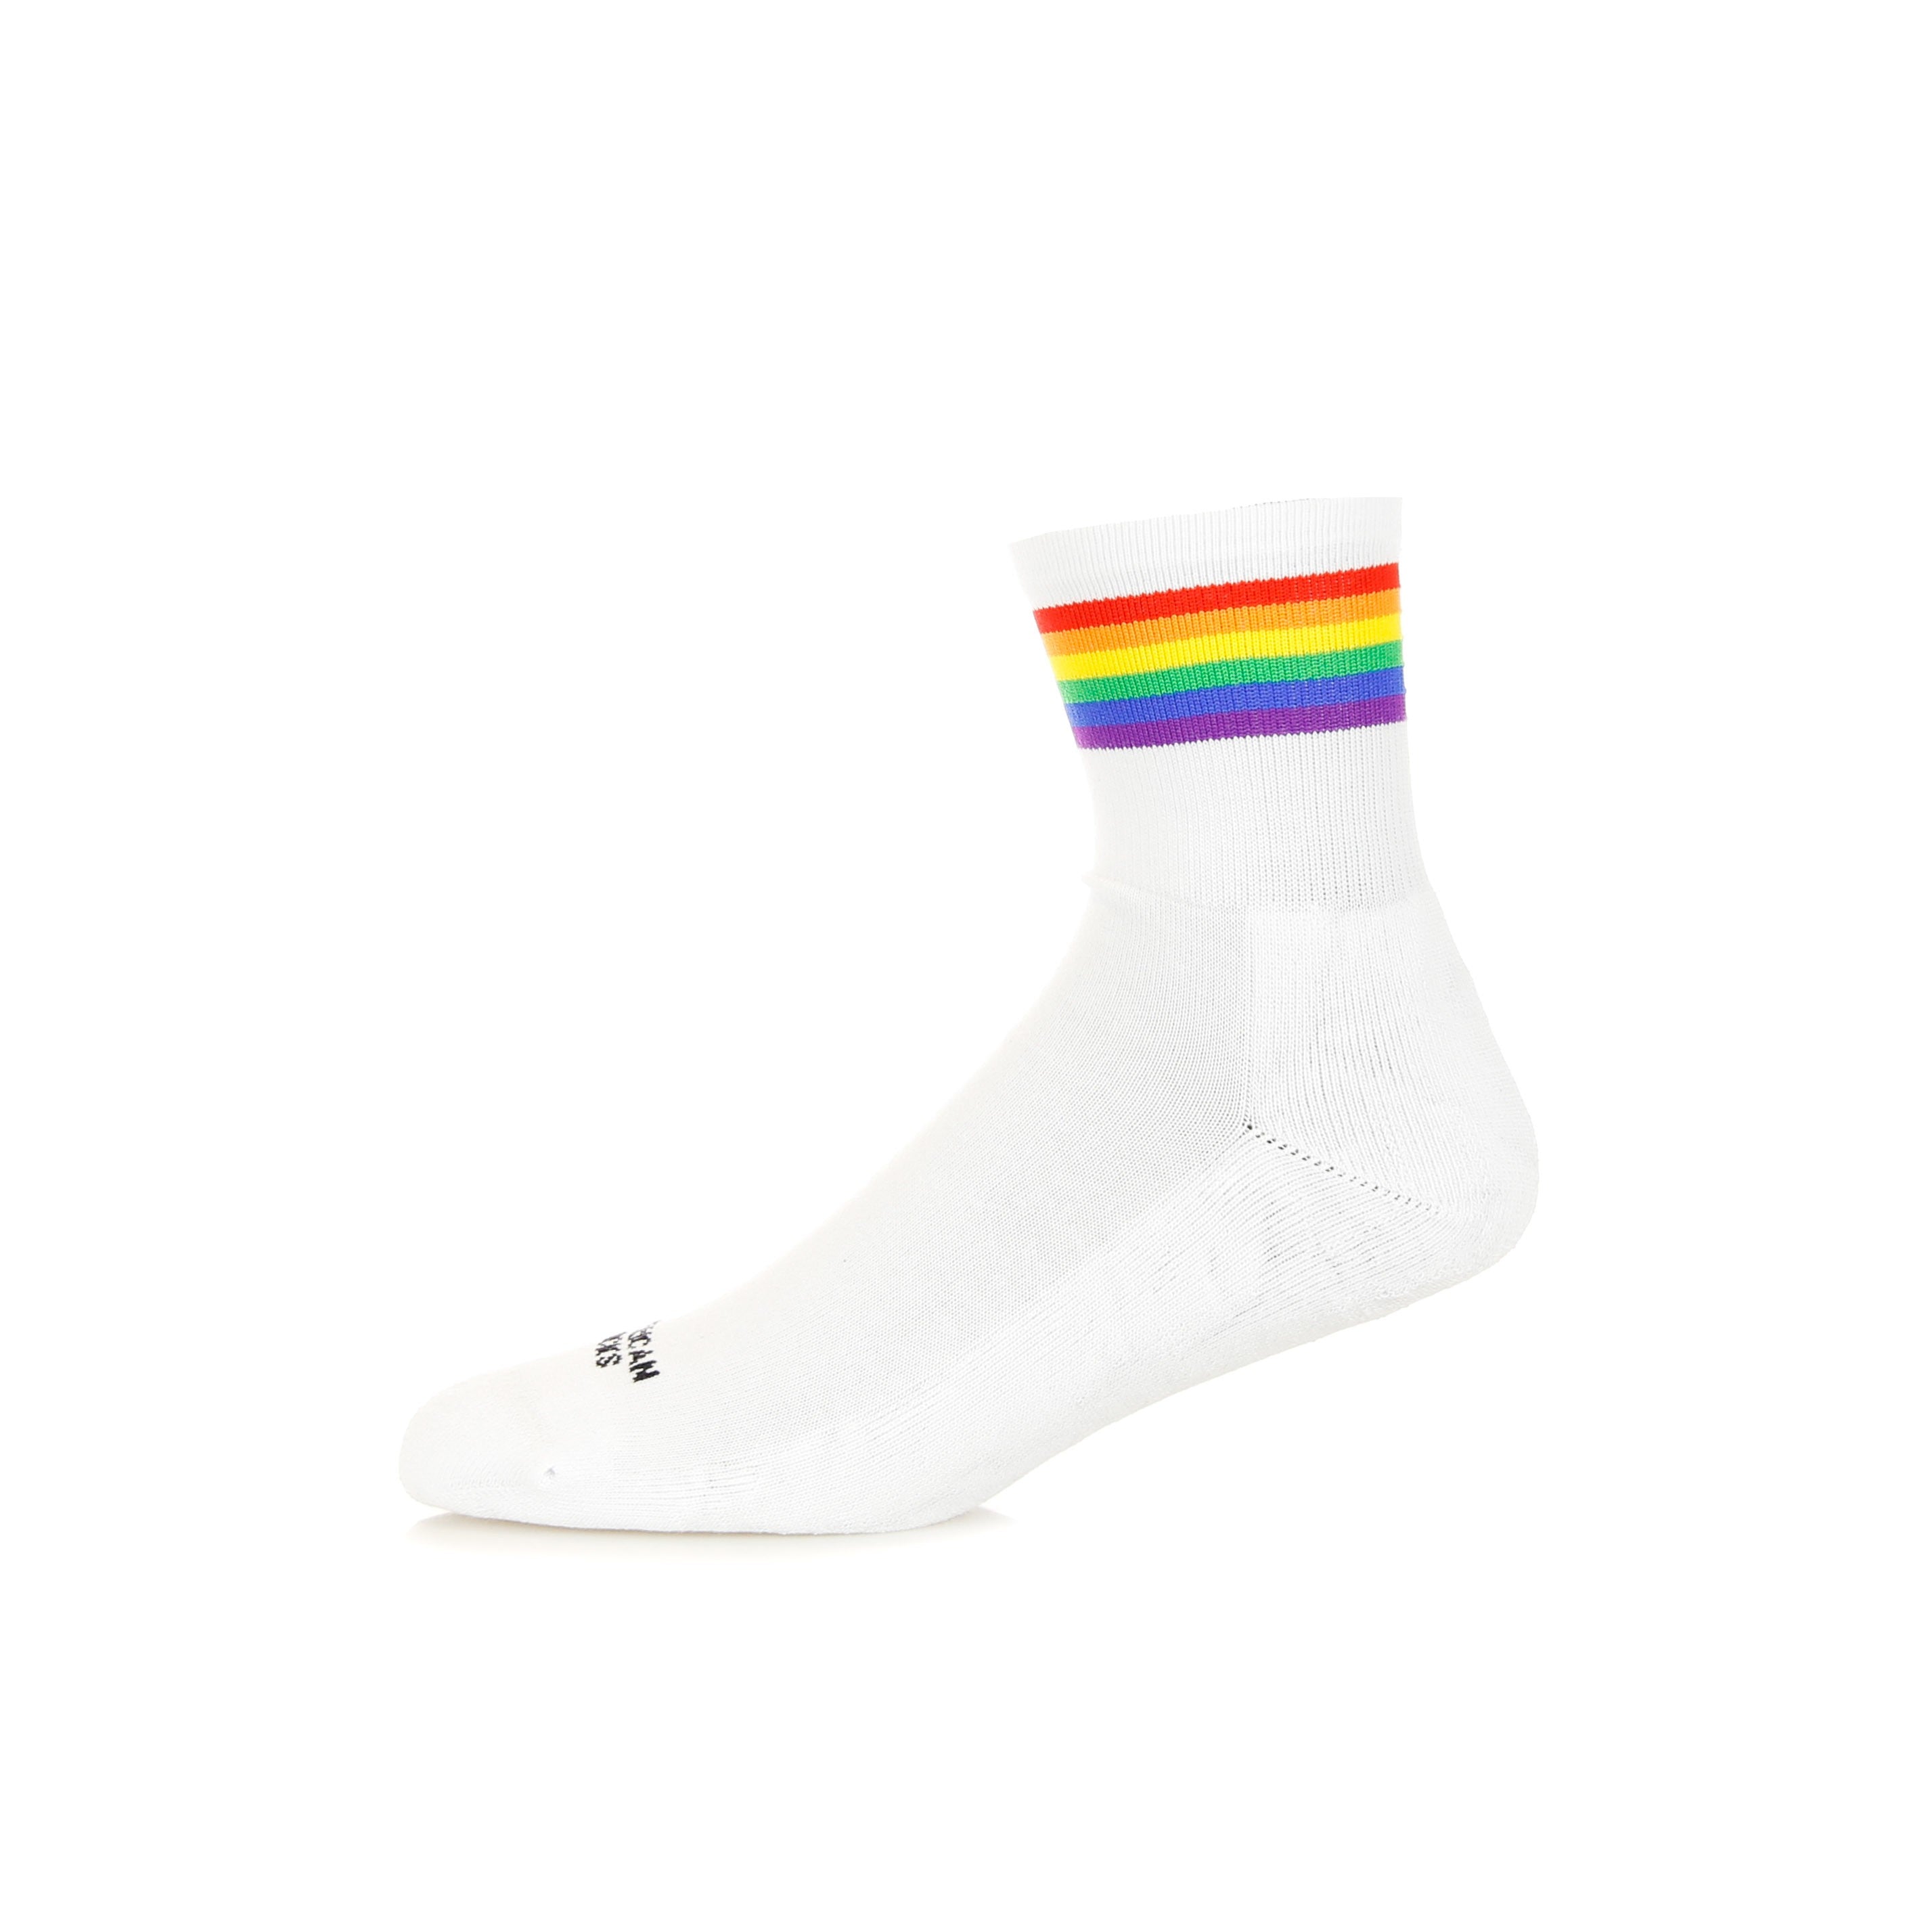 American Socks, Calza Bassa Uomo Rainbow Pride, 